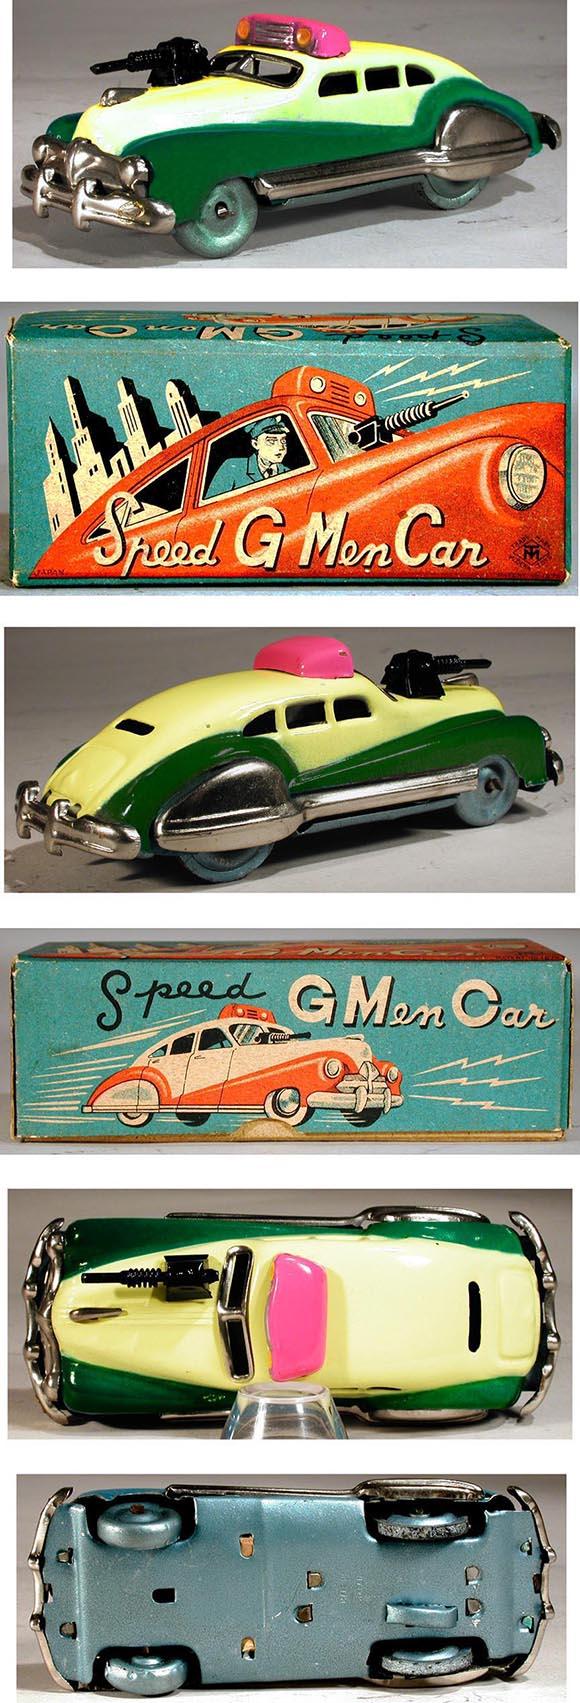 1948 Masudaya, Speed G Men Car (Ford Streamliner) in Original Box